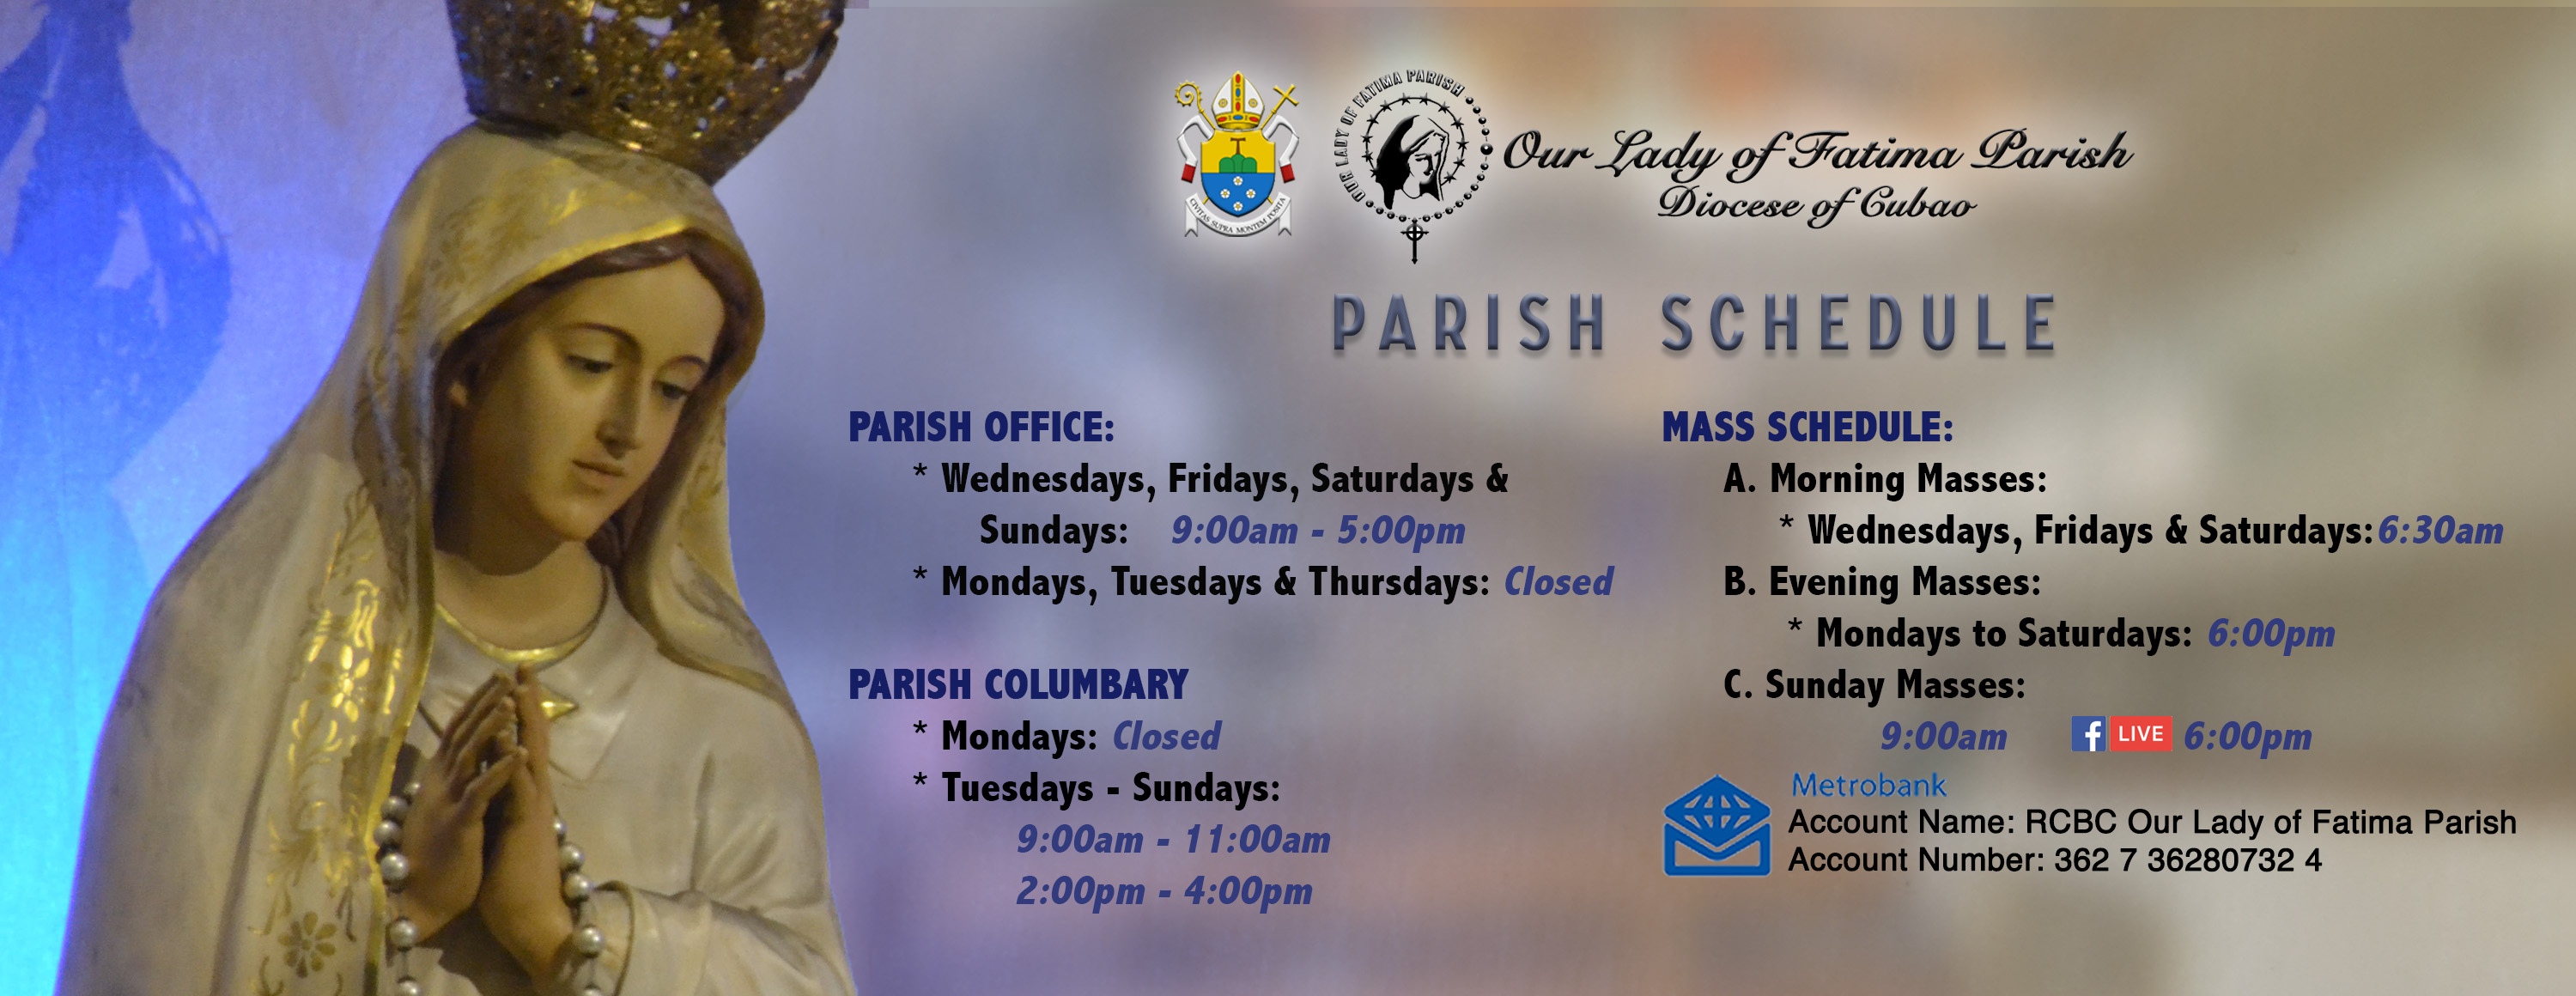 Mass Schedules | Our Lady Of Fatima Parish, Quezon City, Philippines